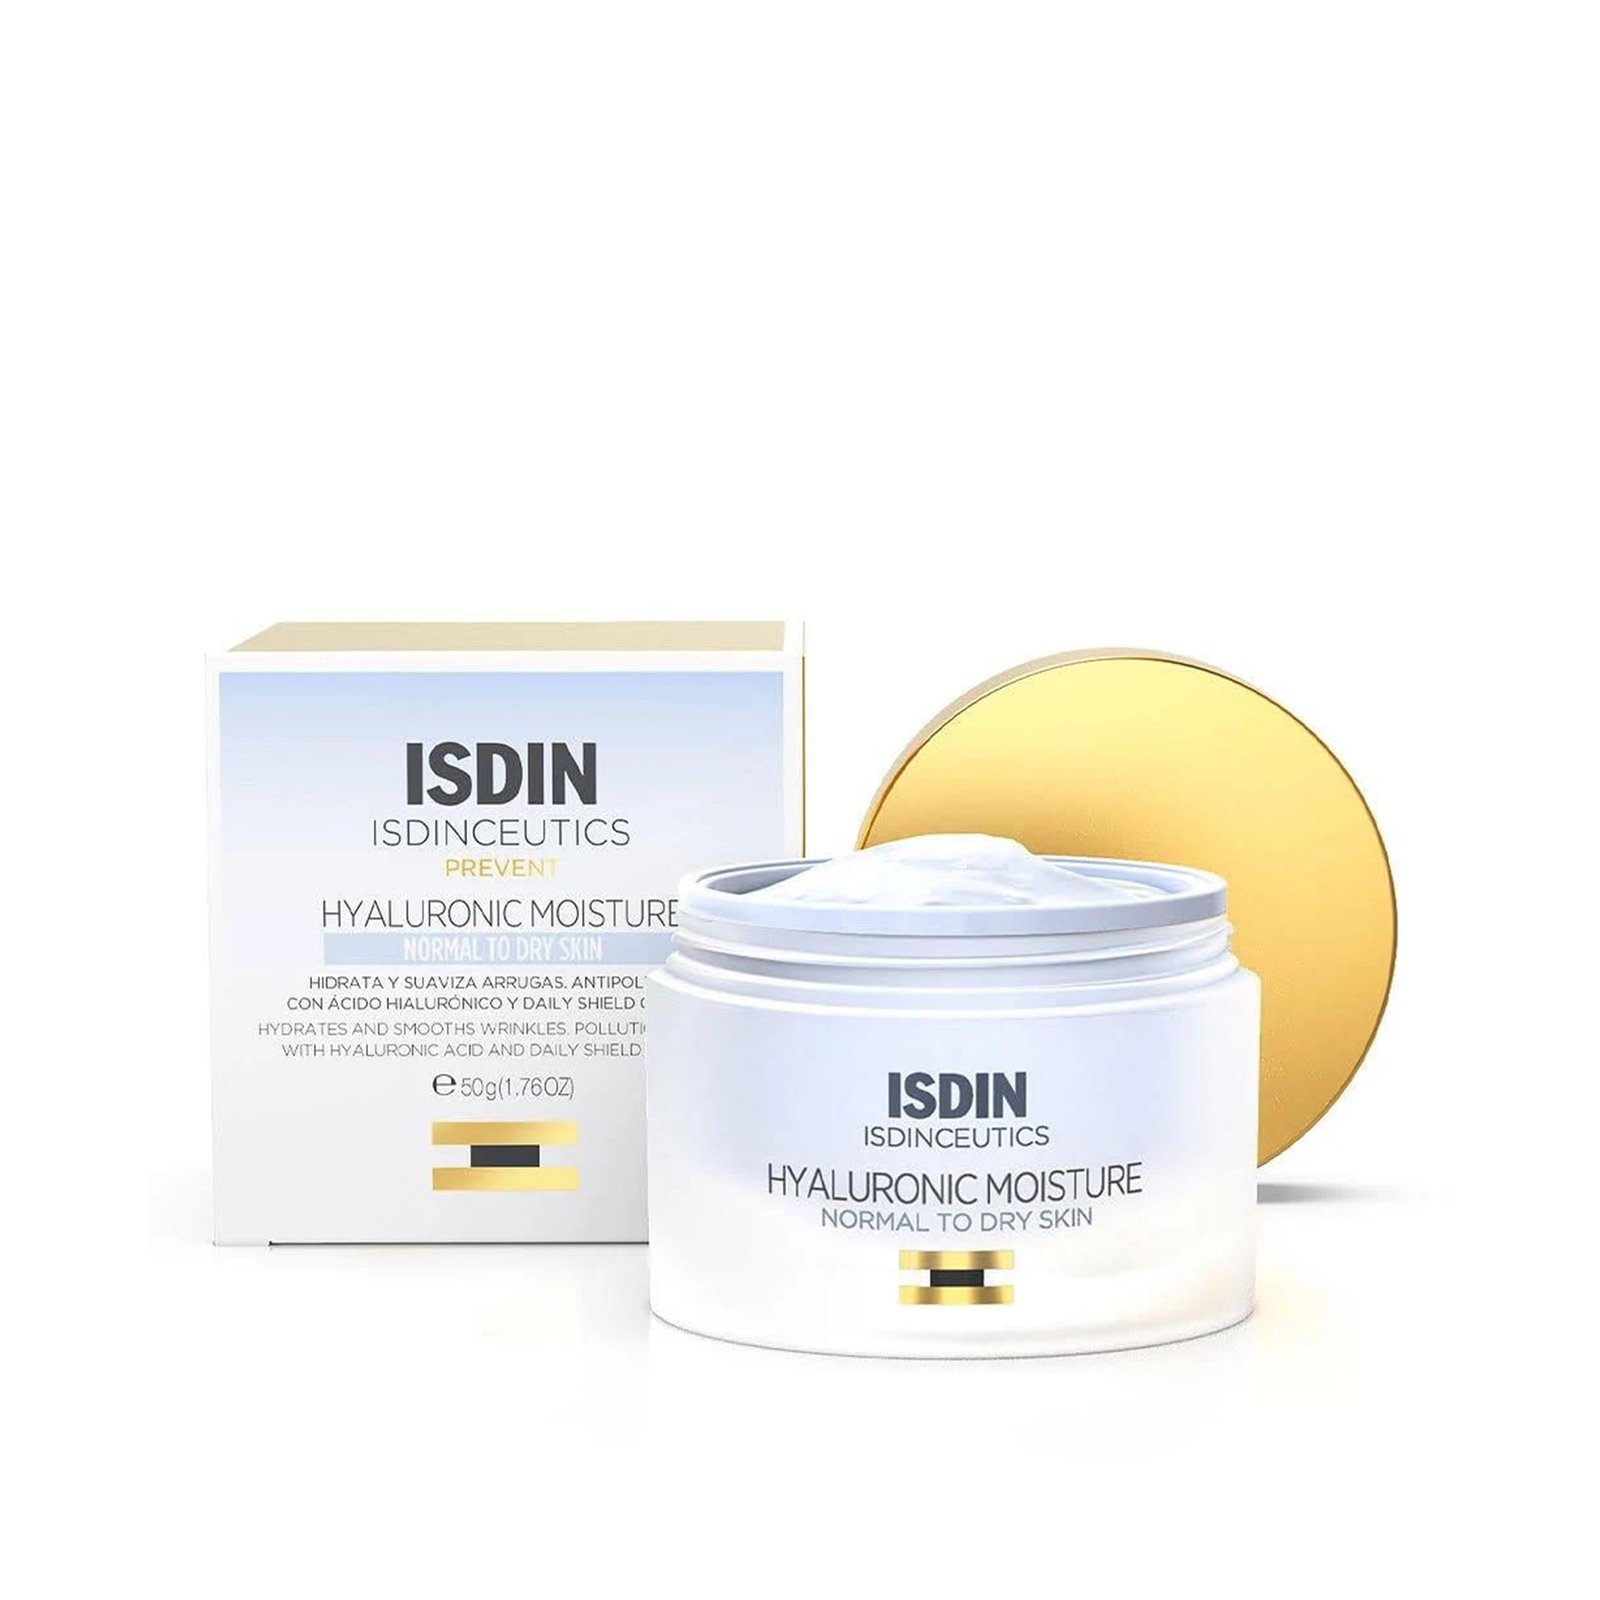 ISDINCEUTICS Hyaluronic Moisture Cream Normal To Dry Skin 50g (1.76 oz)